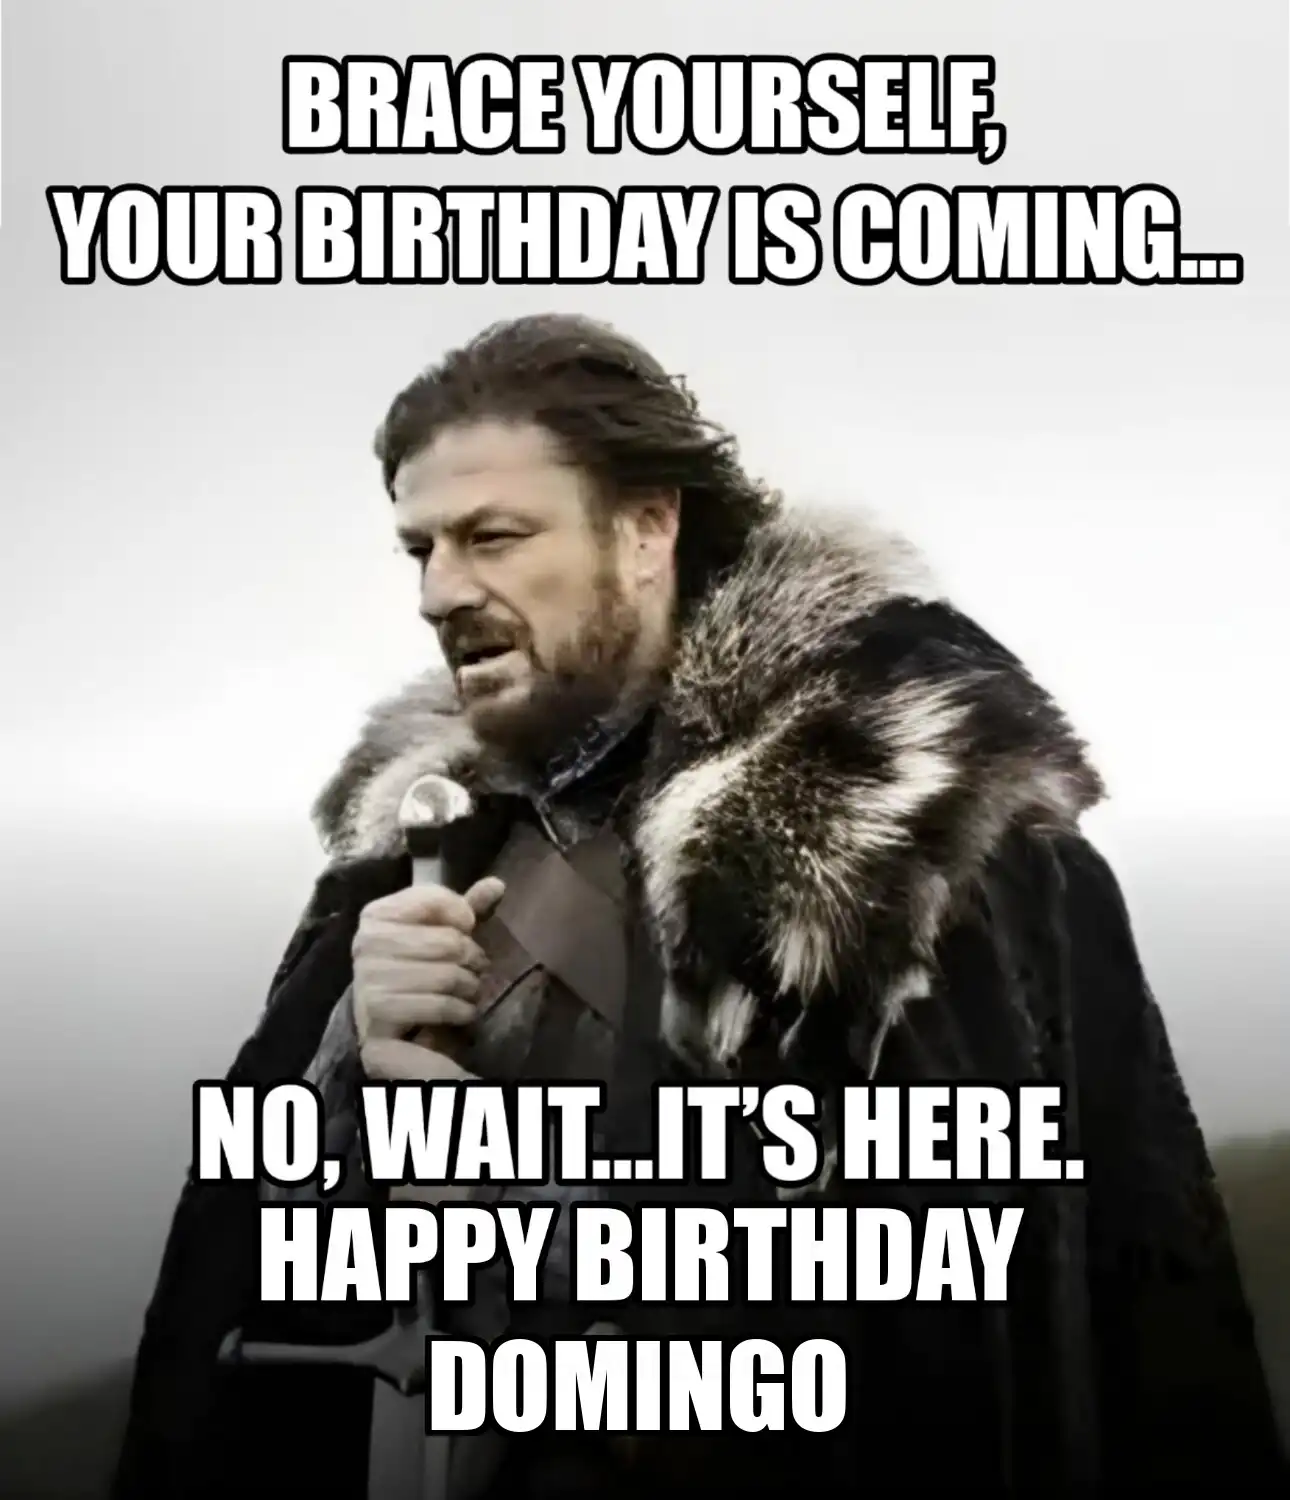 Happy Birthday Domingo Brace Yourself Your Birthday Is Coming Meme